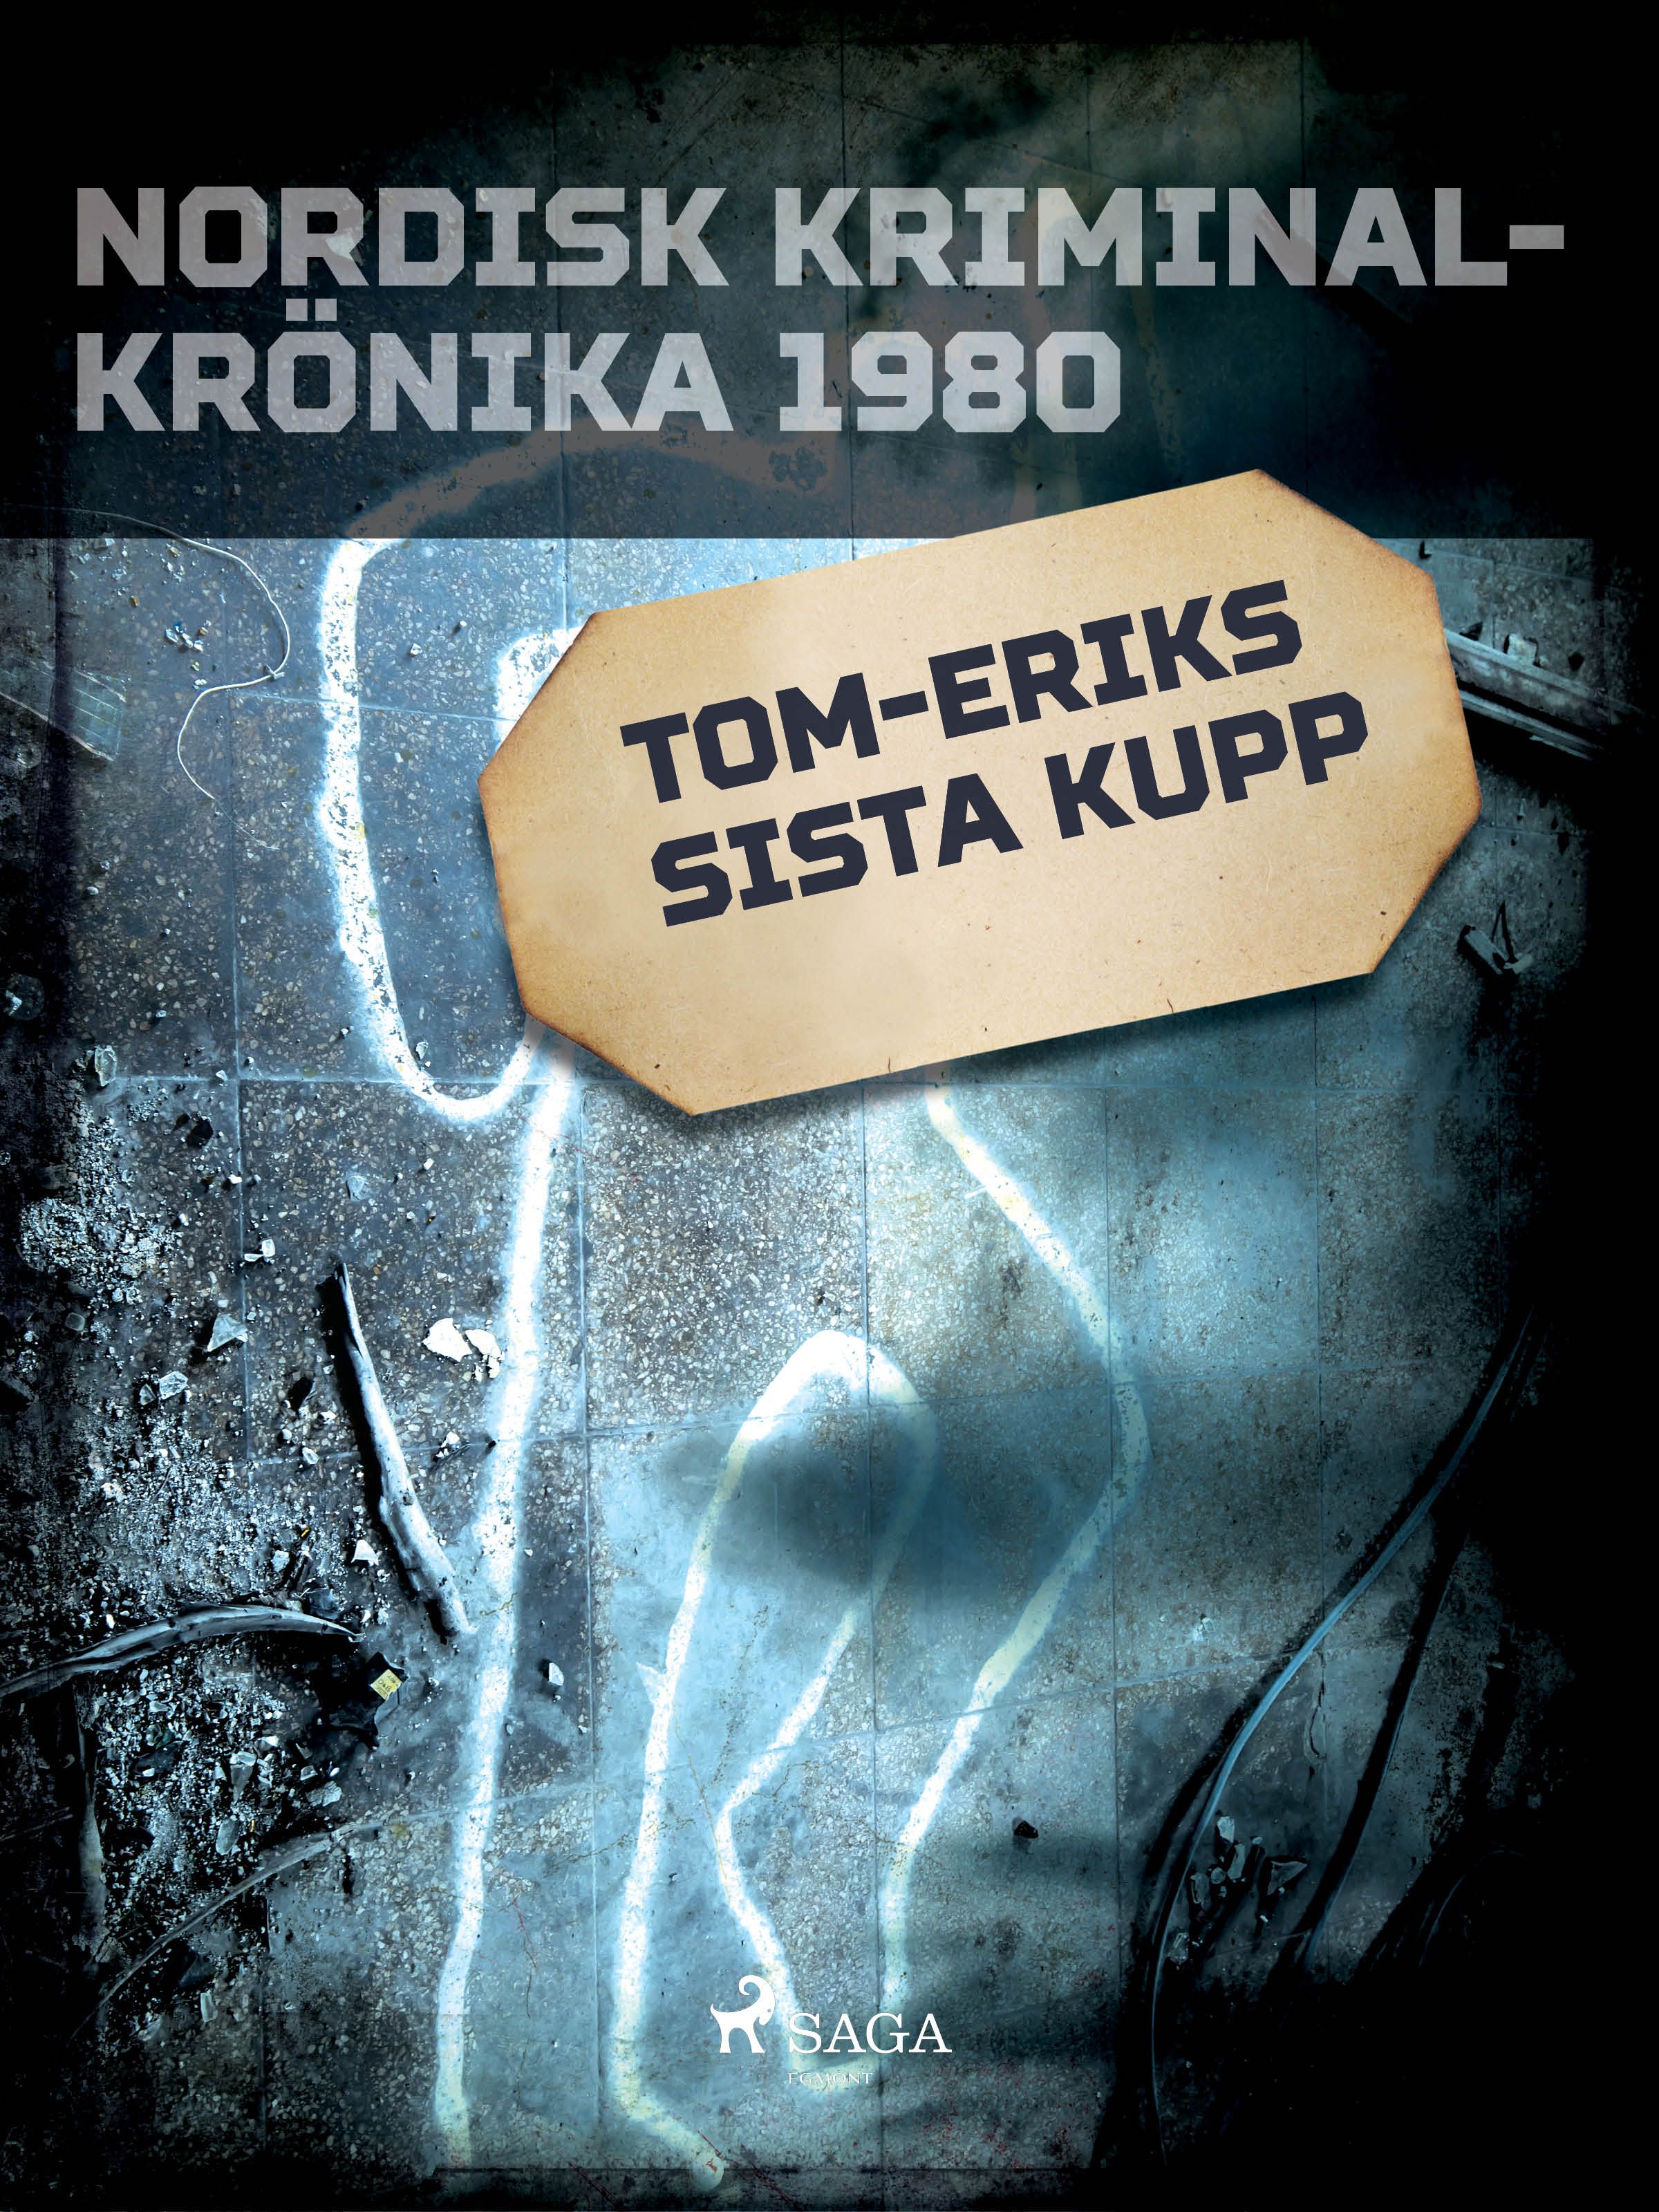 Tom-Eriks sista kupp, eBook by Diverse